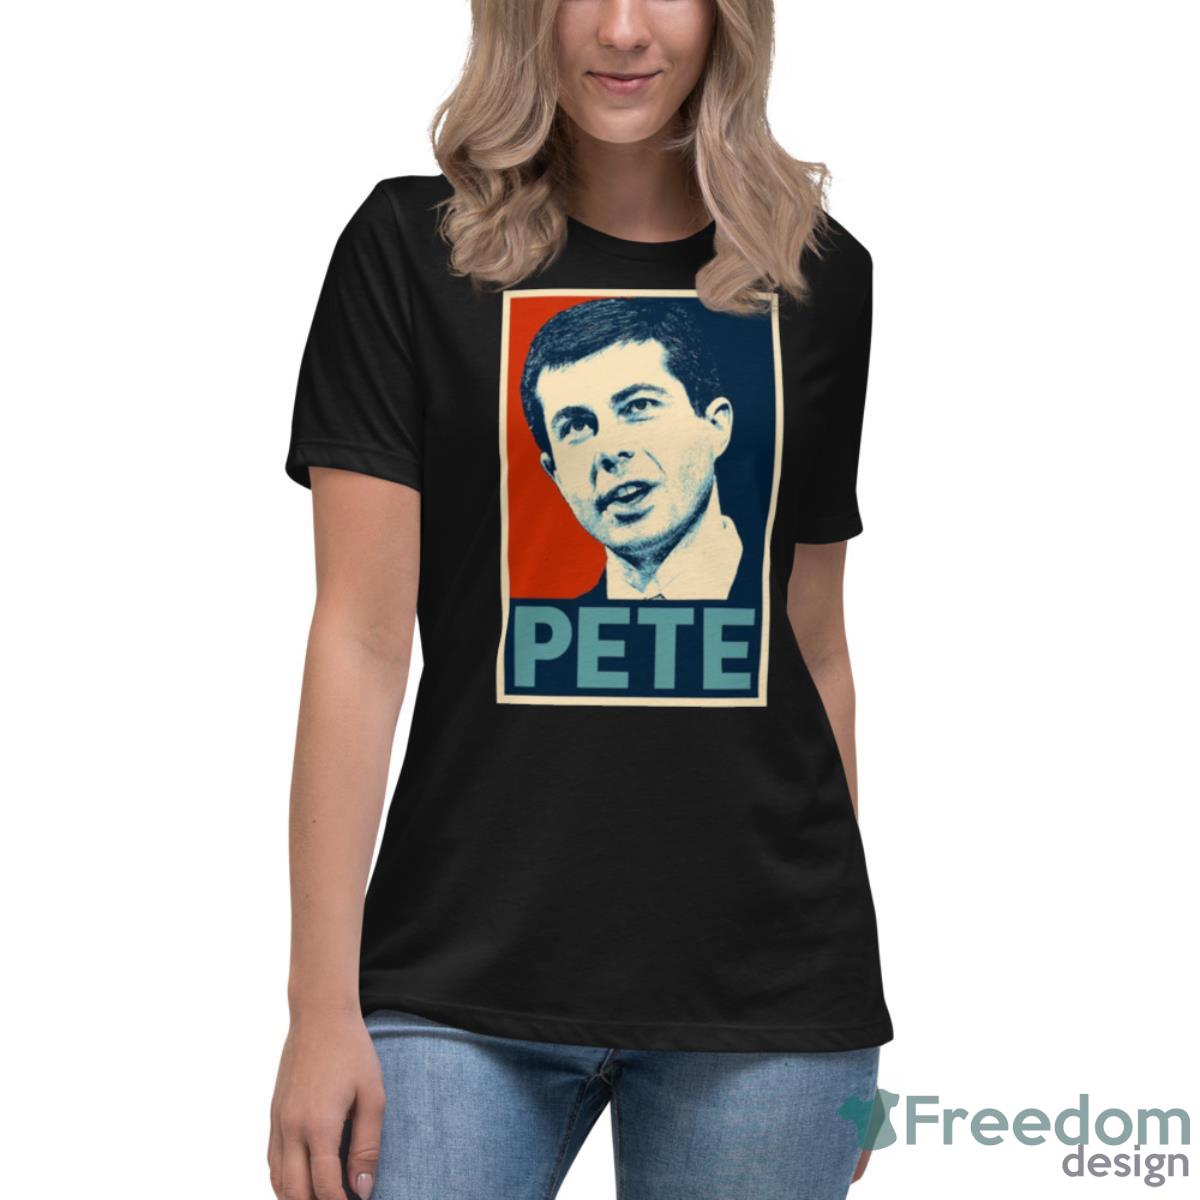 Pete Hope Pete Buttigieg Shirt